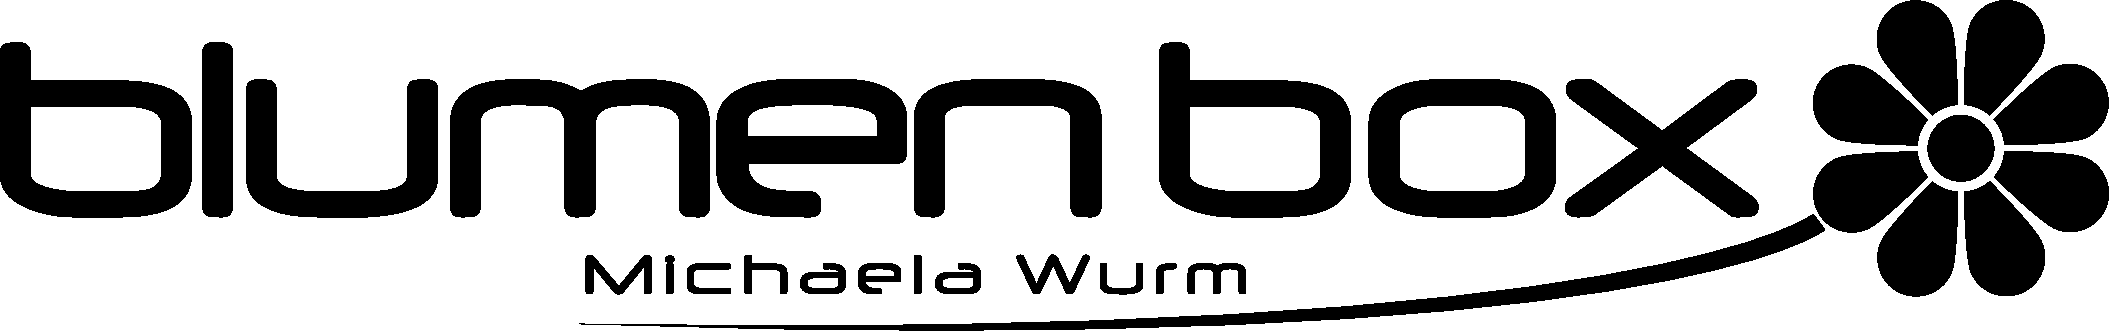 Logo Michaela Wurm - blumenbox